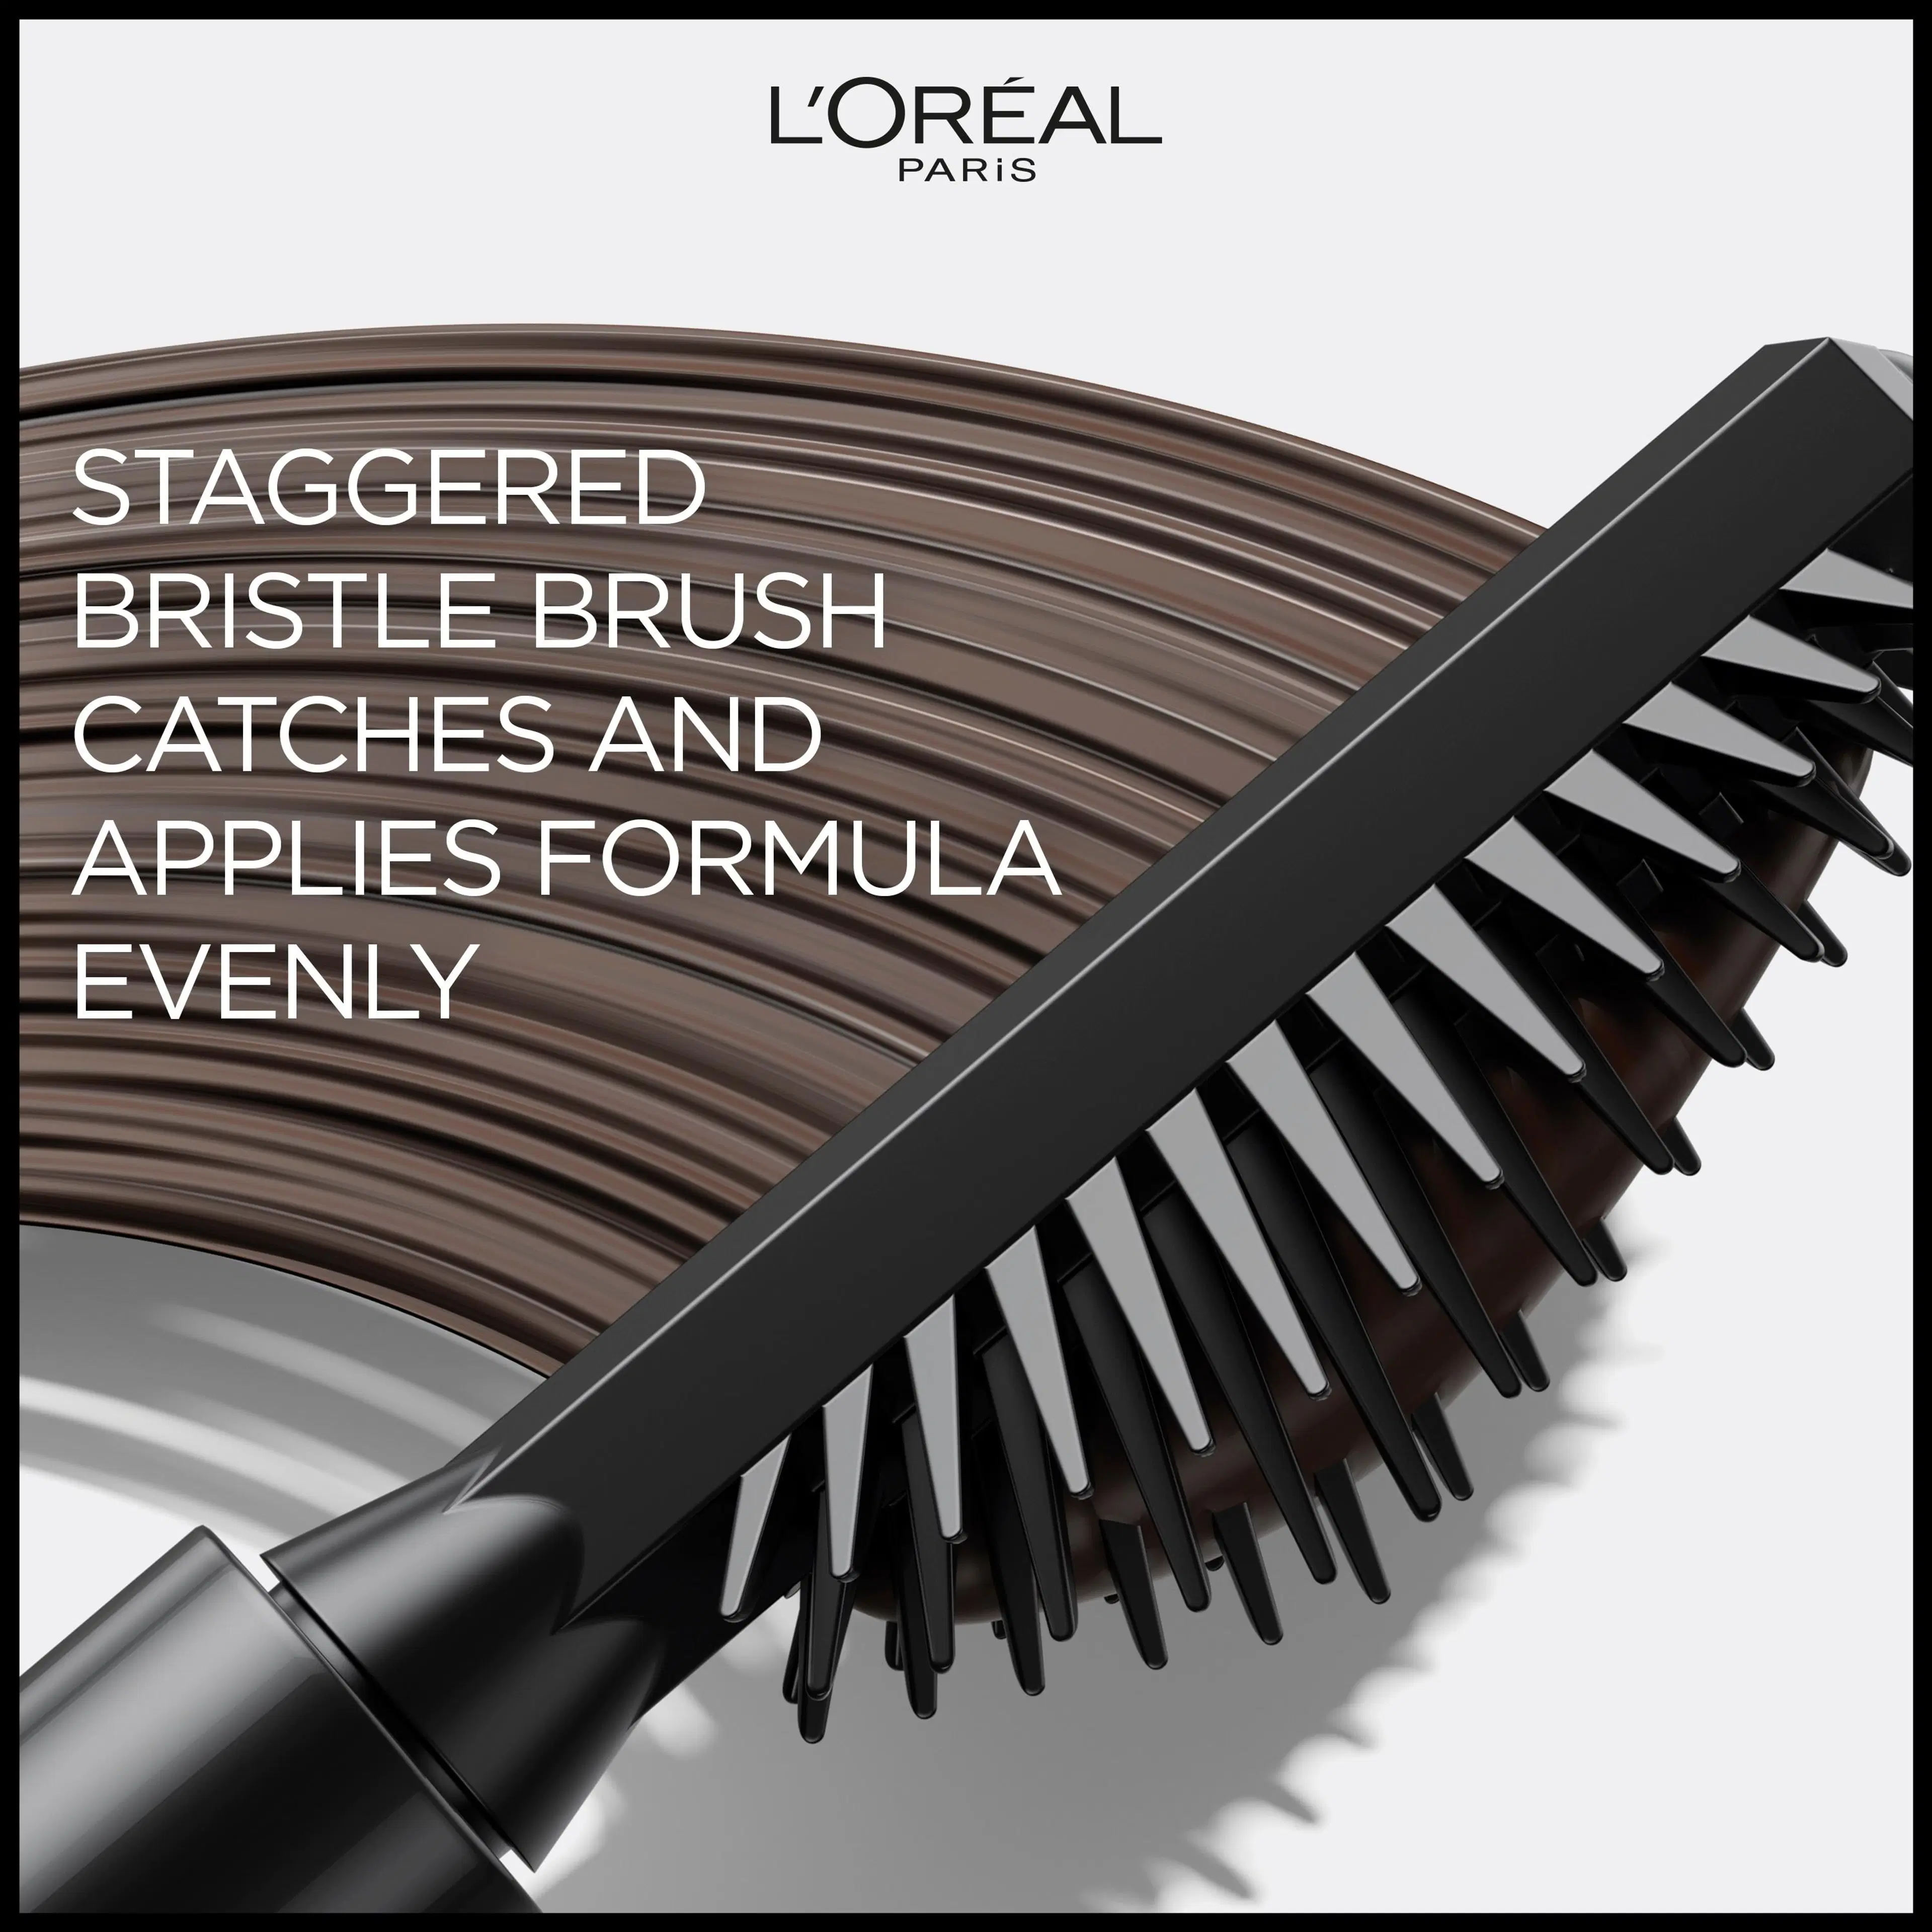 L'Oréal Paris Infaillible Brows 24H Volumizing Eyebrow 5.0 Light Brunette kulmamaskara 5ml